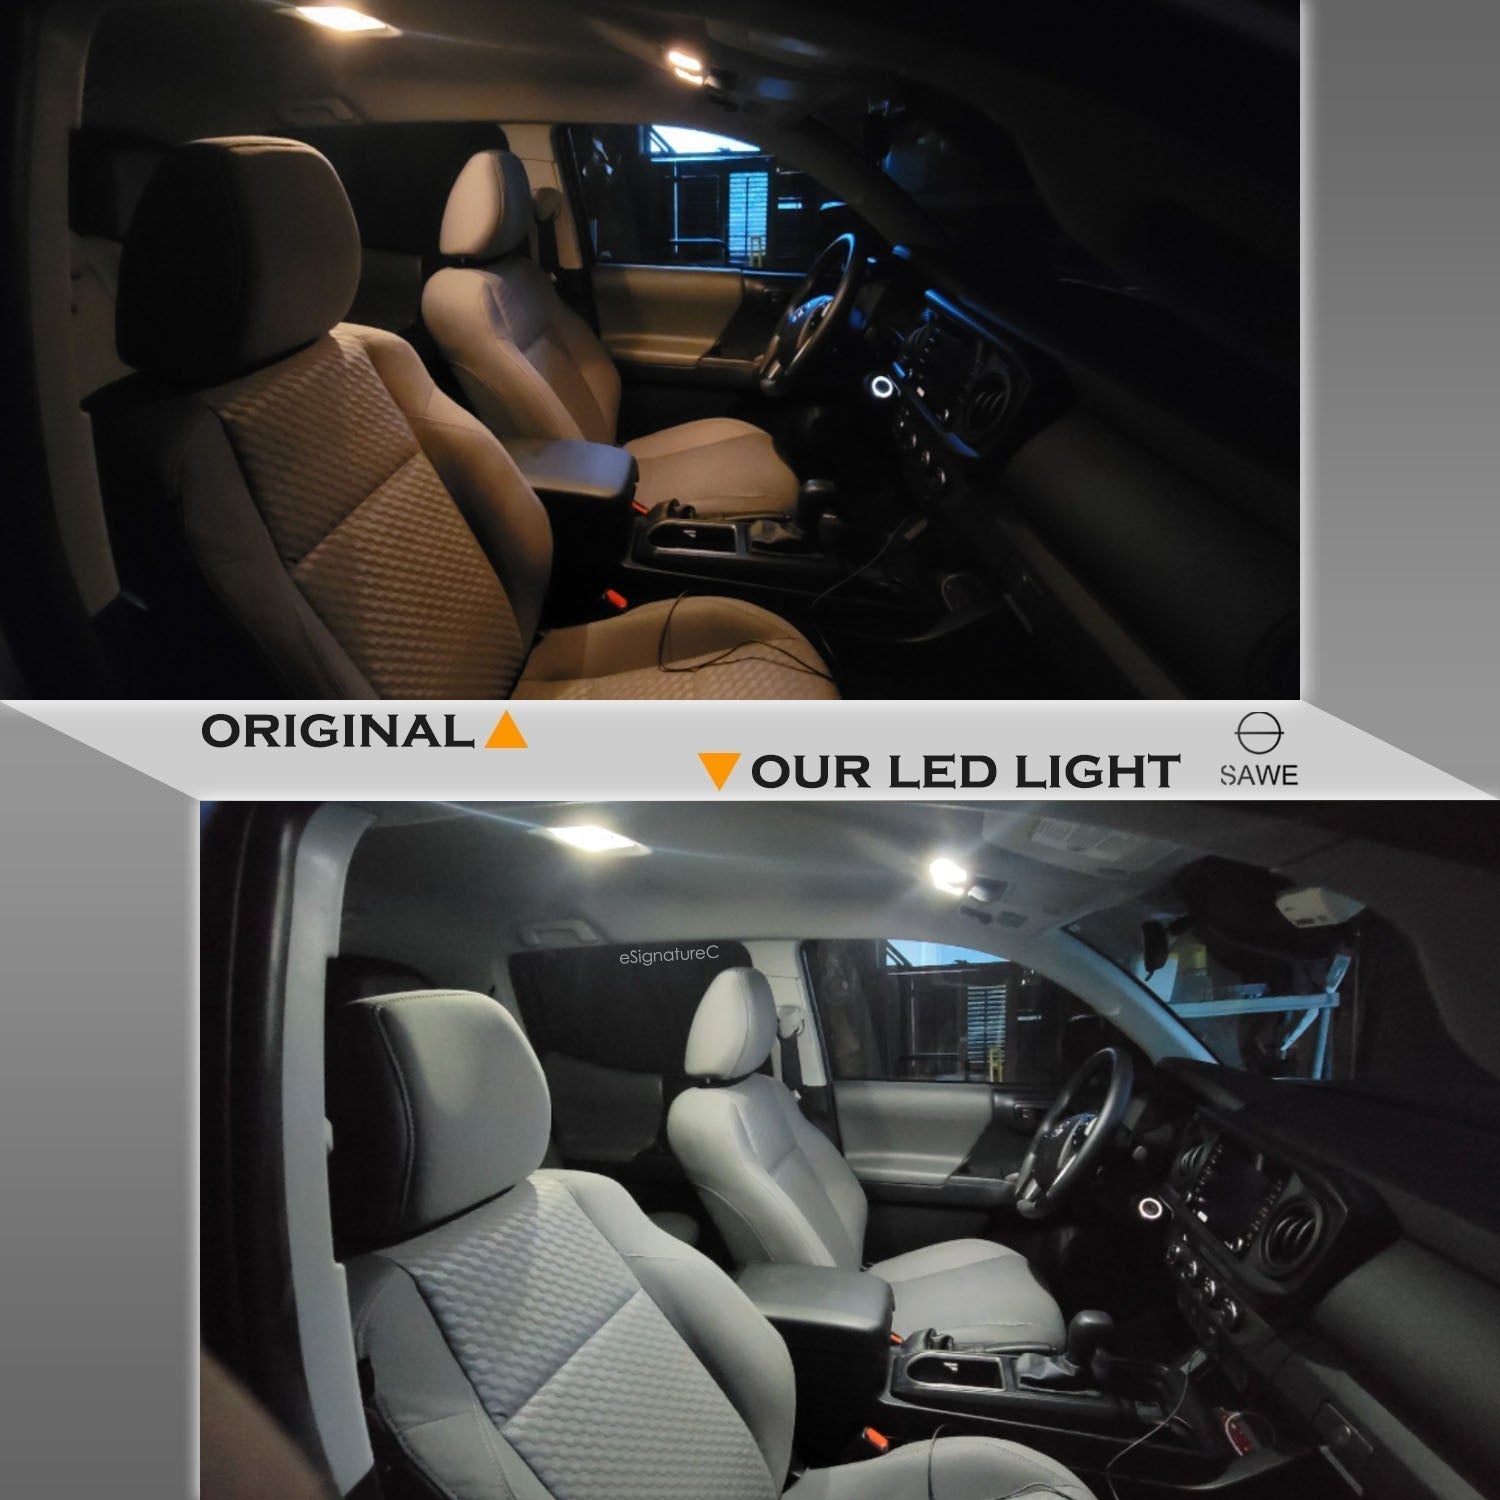 For Toyota Highlander Interior LED Lights - Dome & Map Lights Package Kit for 2001 - 2007 - White